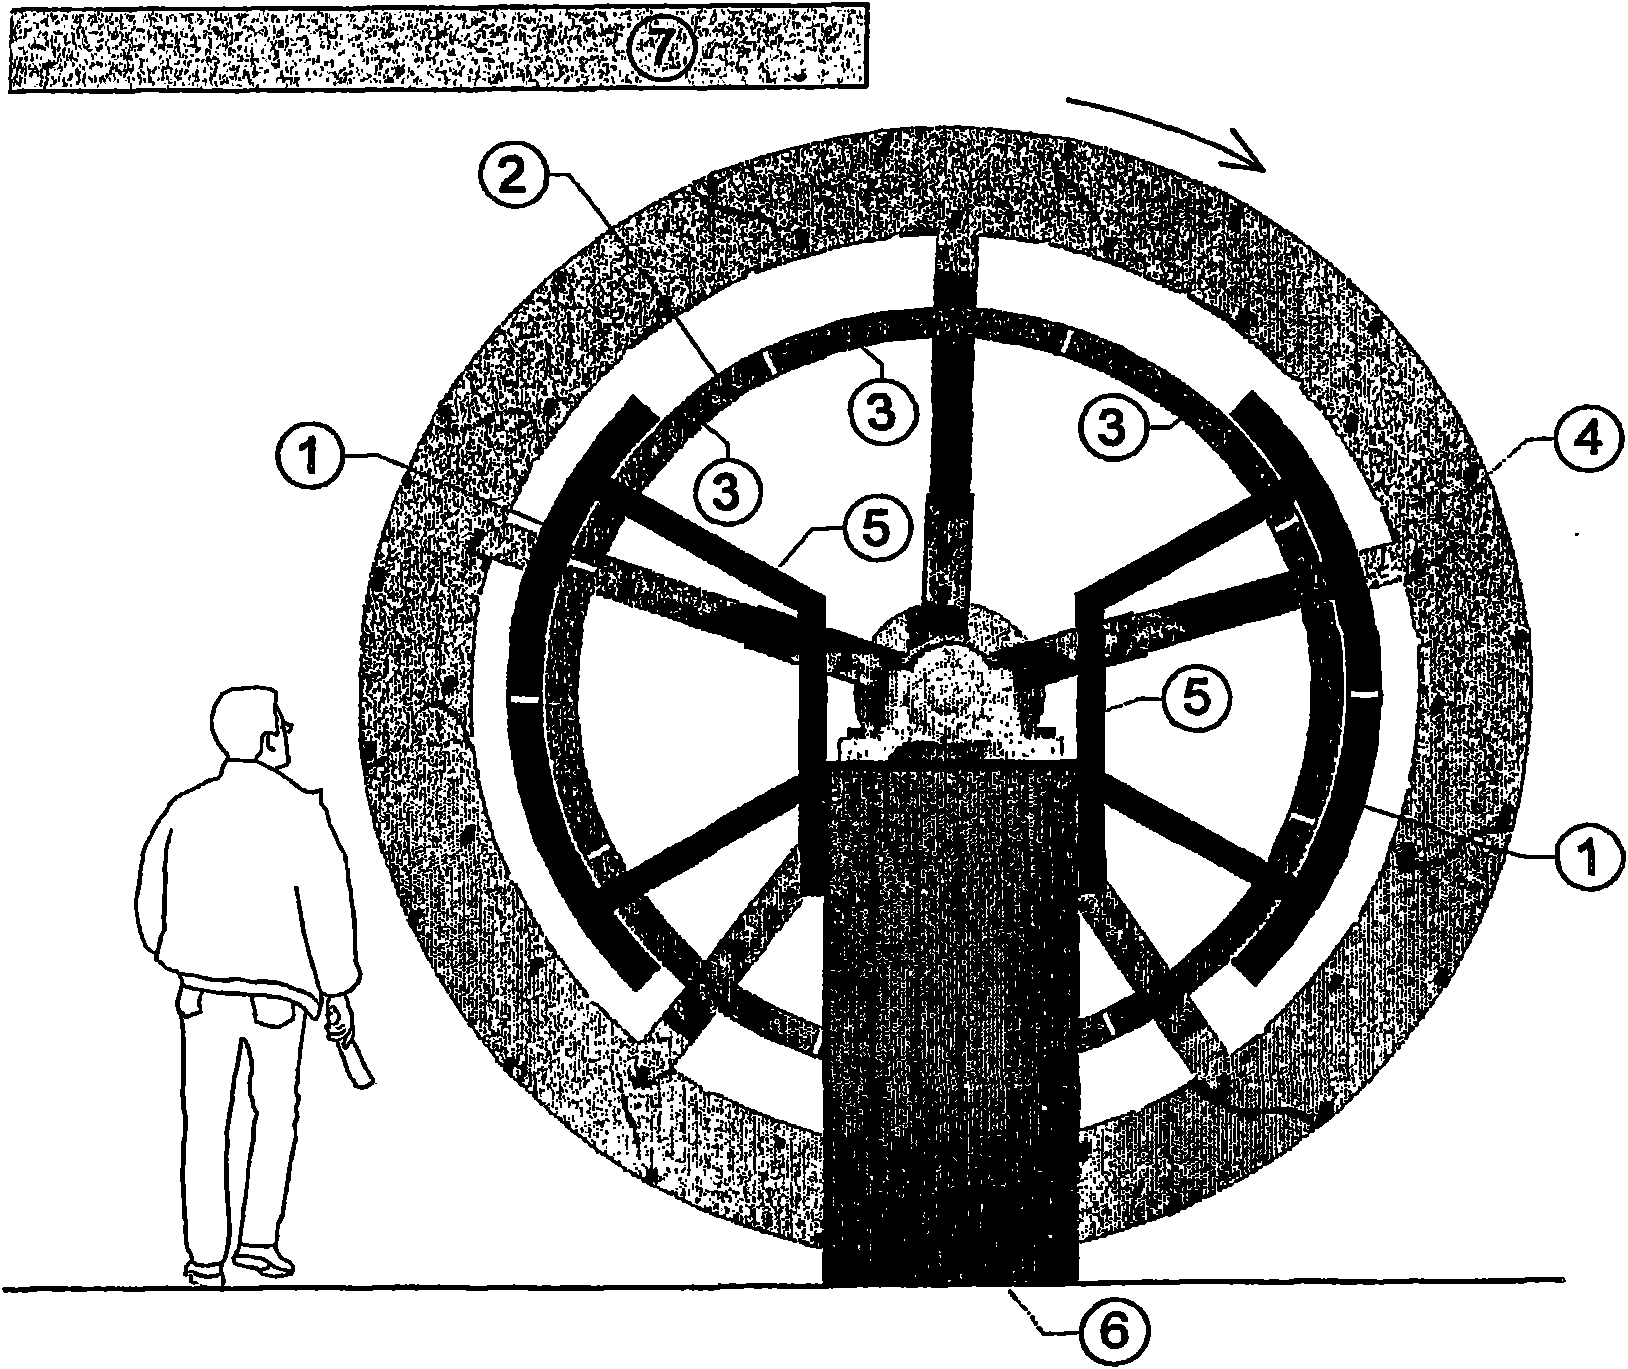 Water wheel comprising a built-in generator